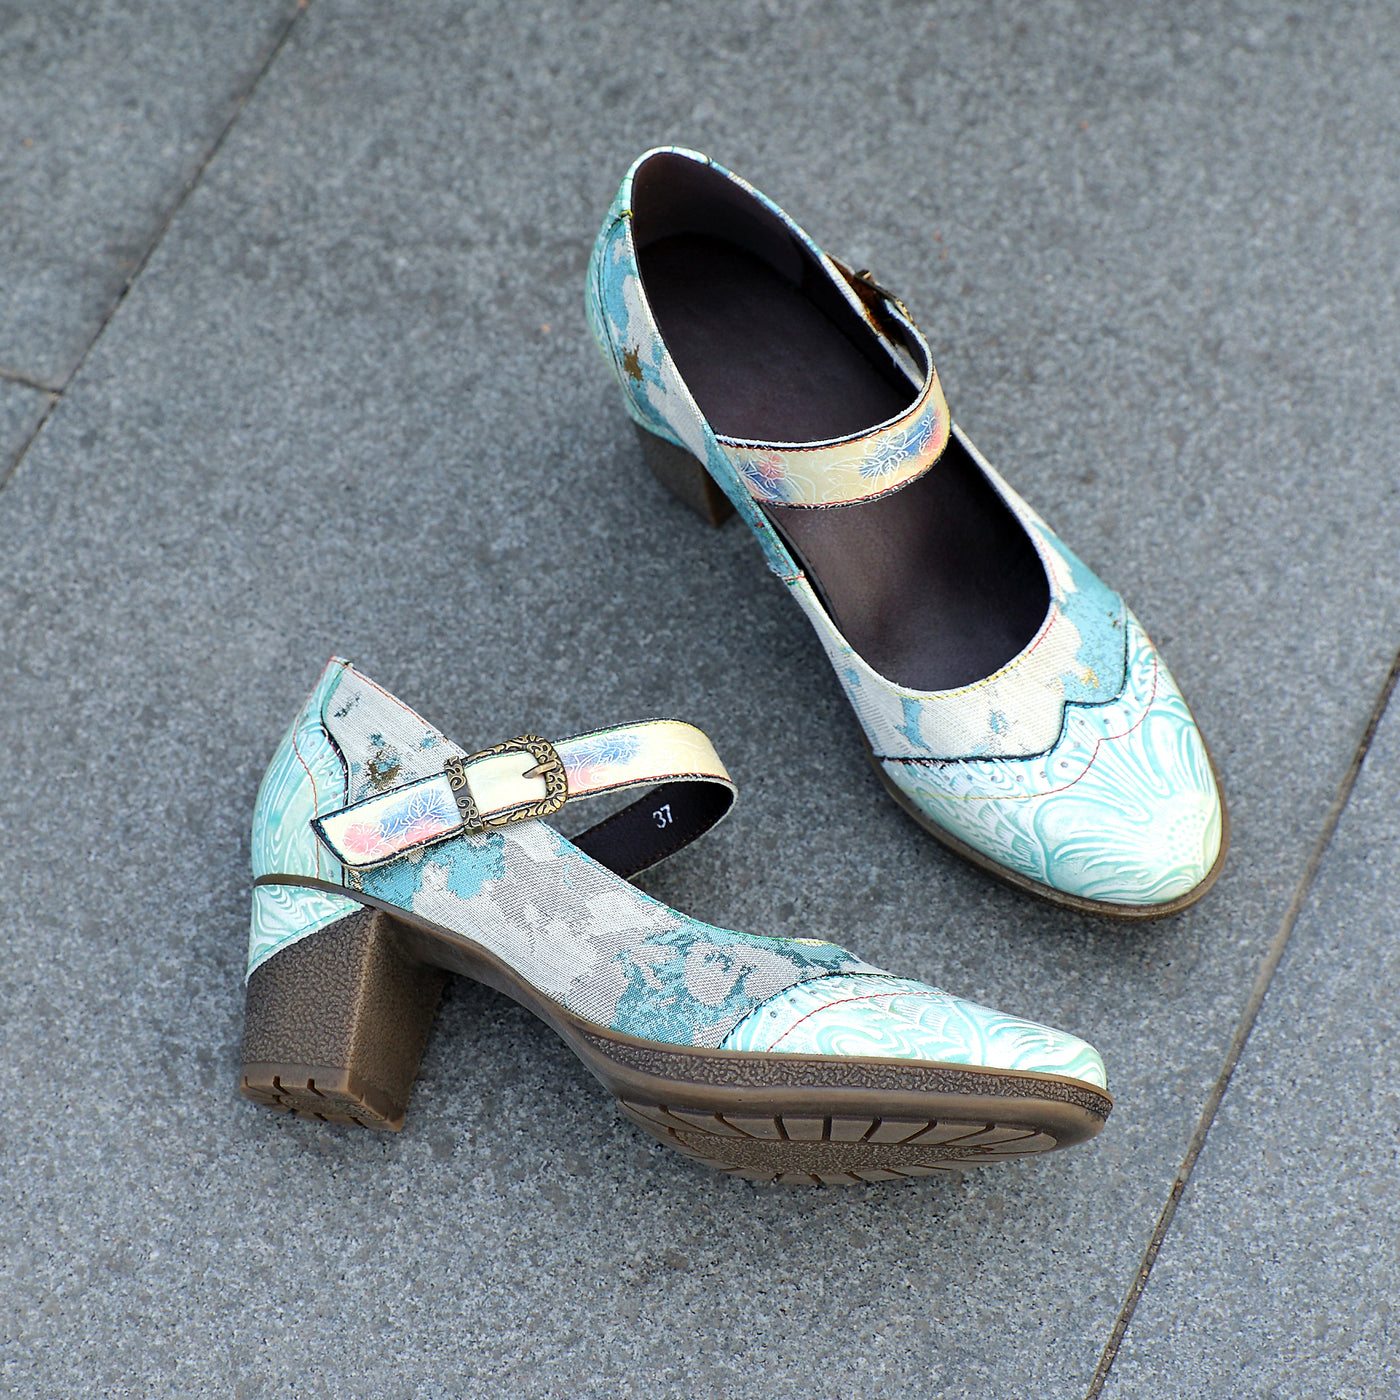 Lady's Heels Handmade Shoes Wedding Party Elegant Vintage Leather Buckle Light Blue Pumps